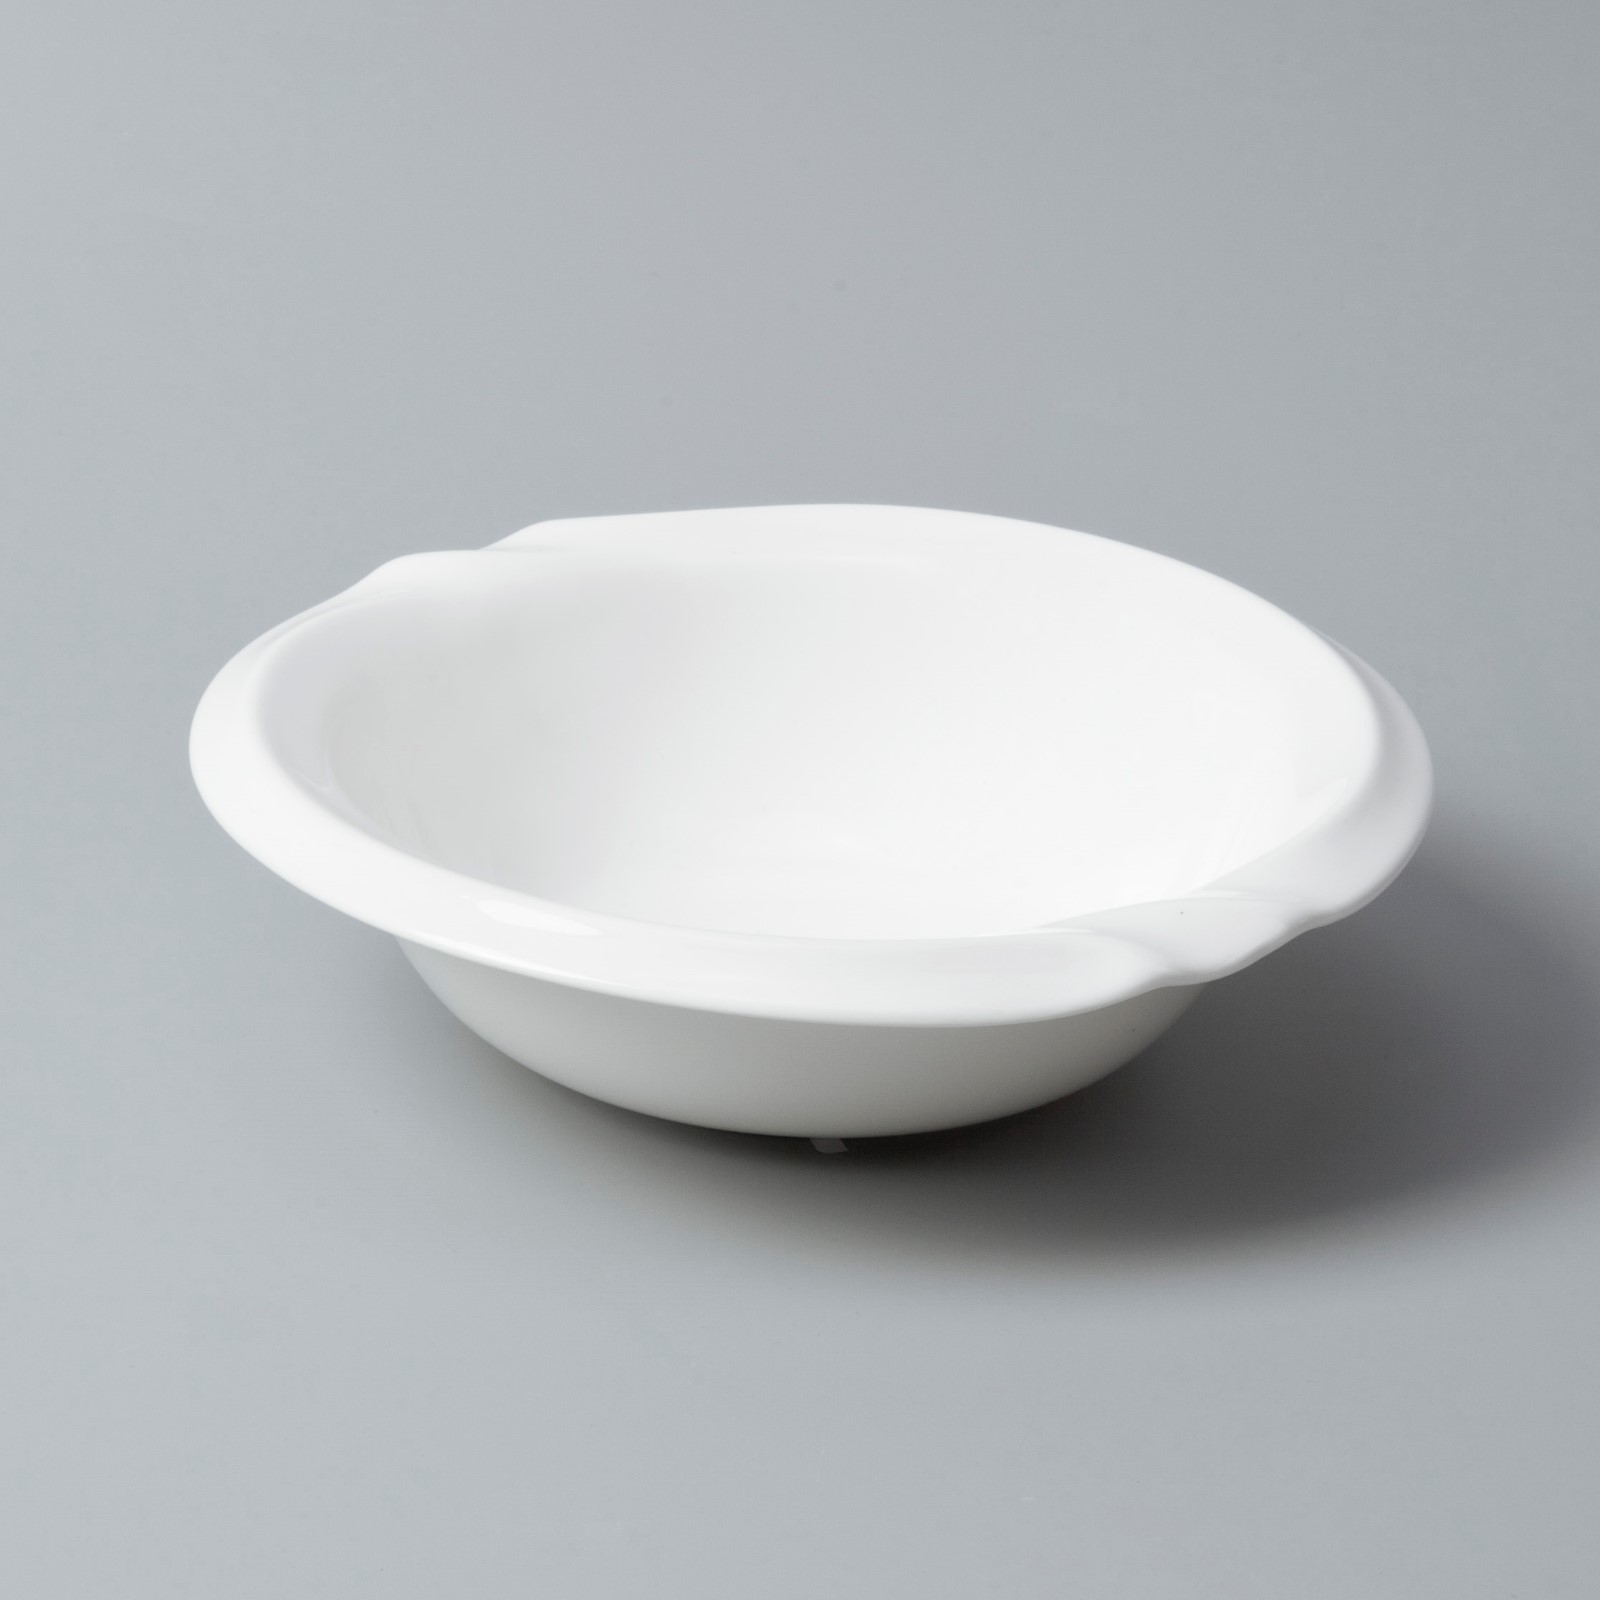 rim white plate set series for hotel-3